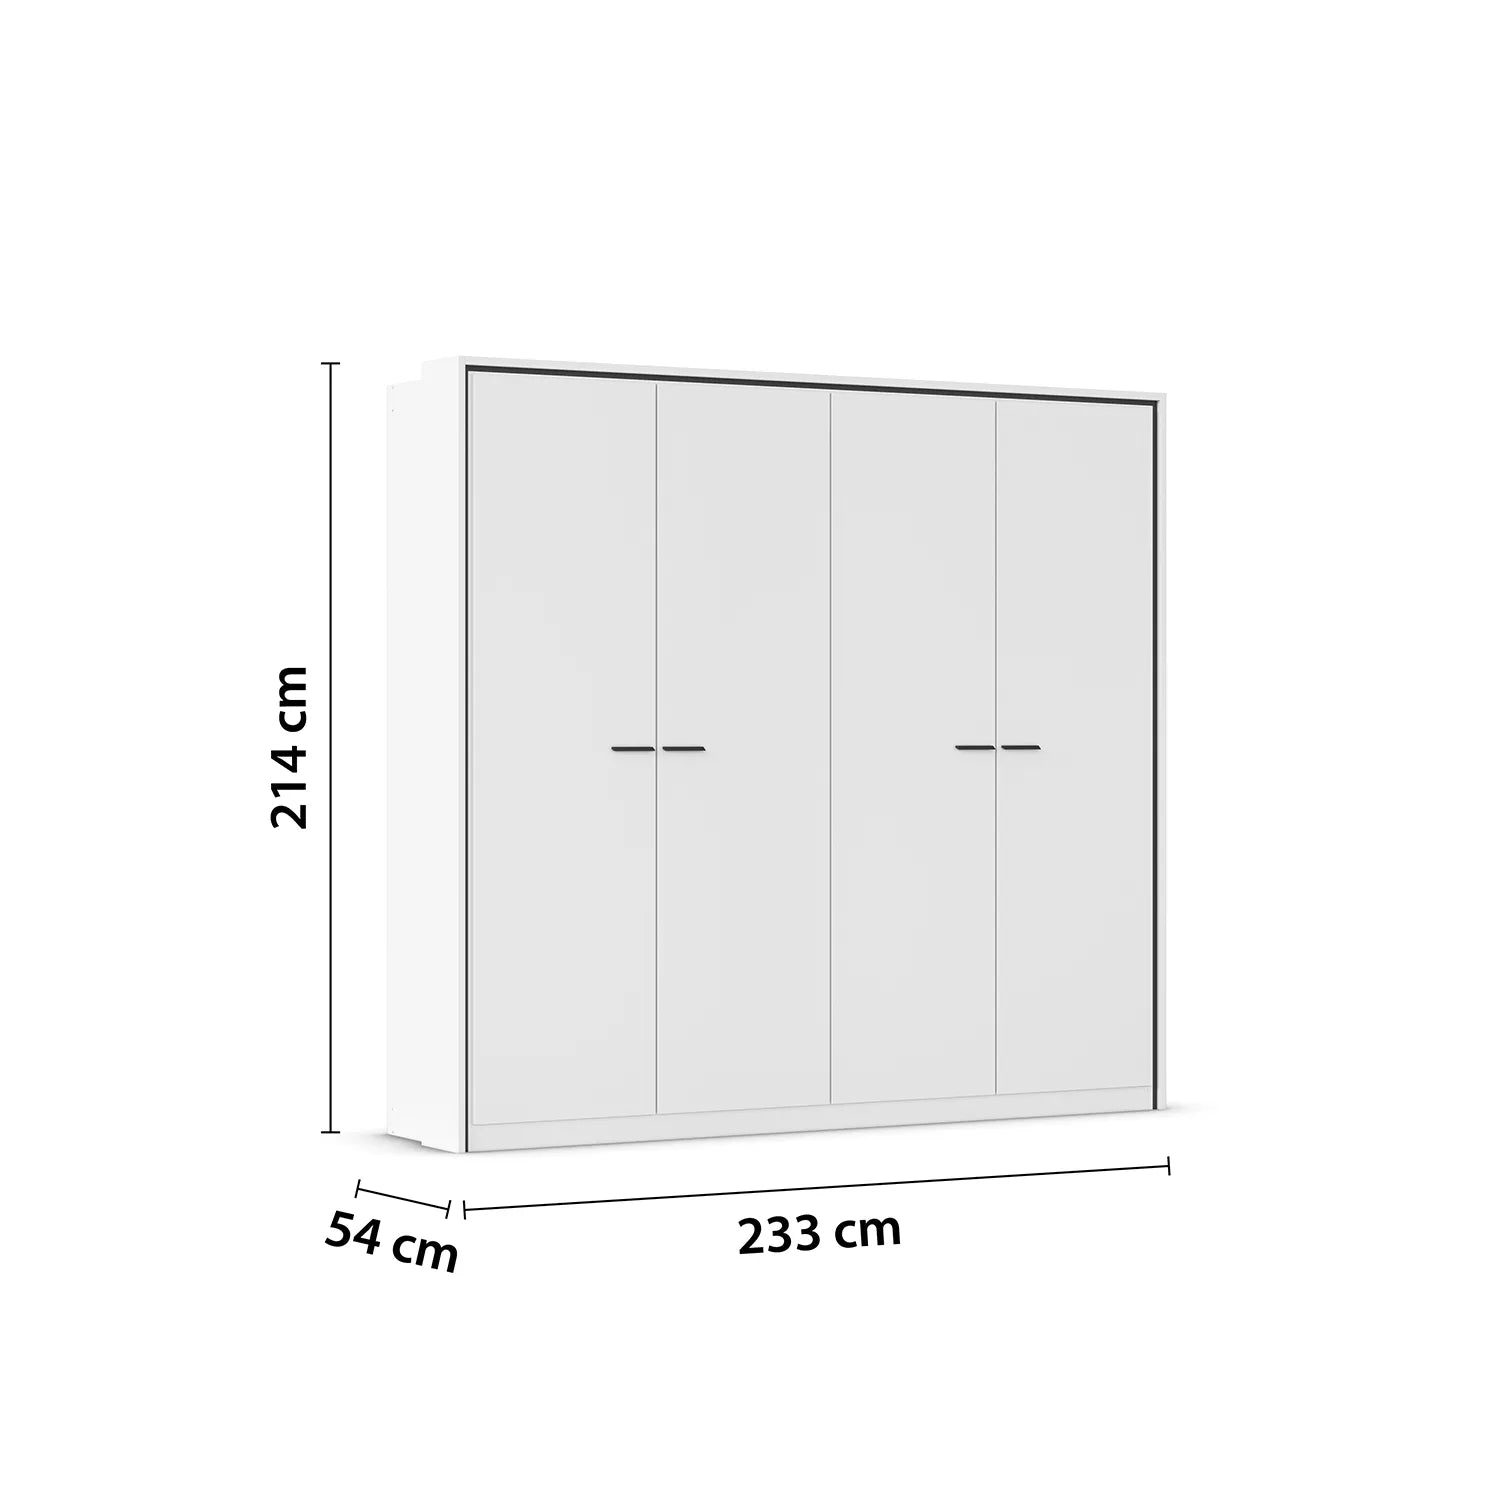 Zolo White 4 Door hinged Wardrobe - 230cm